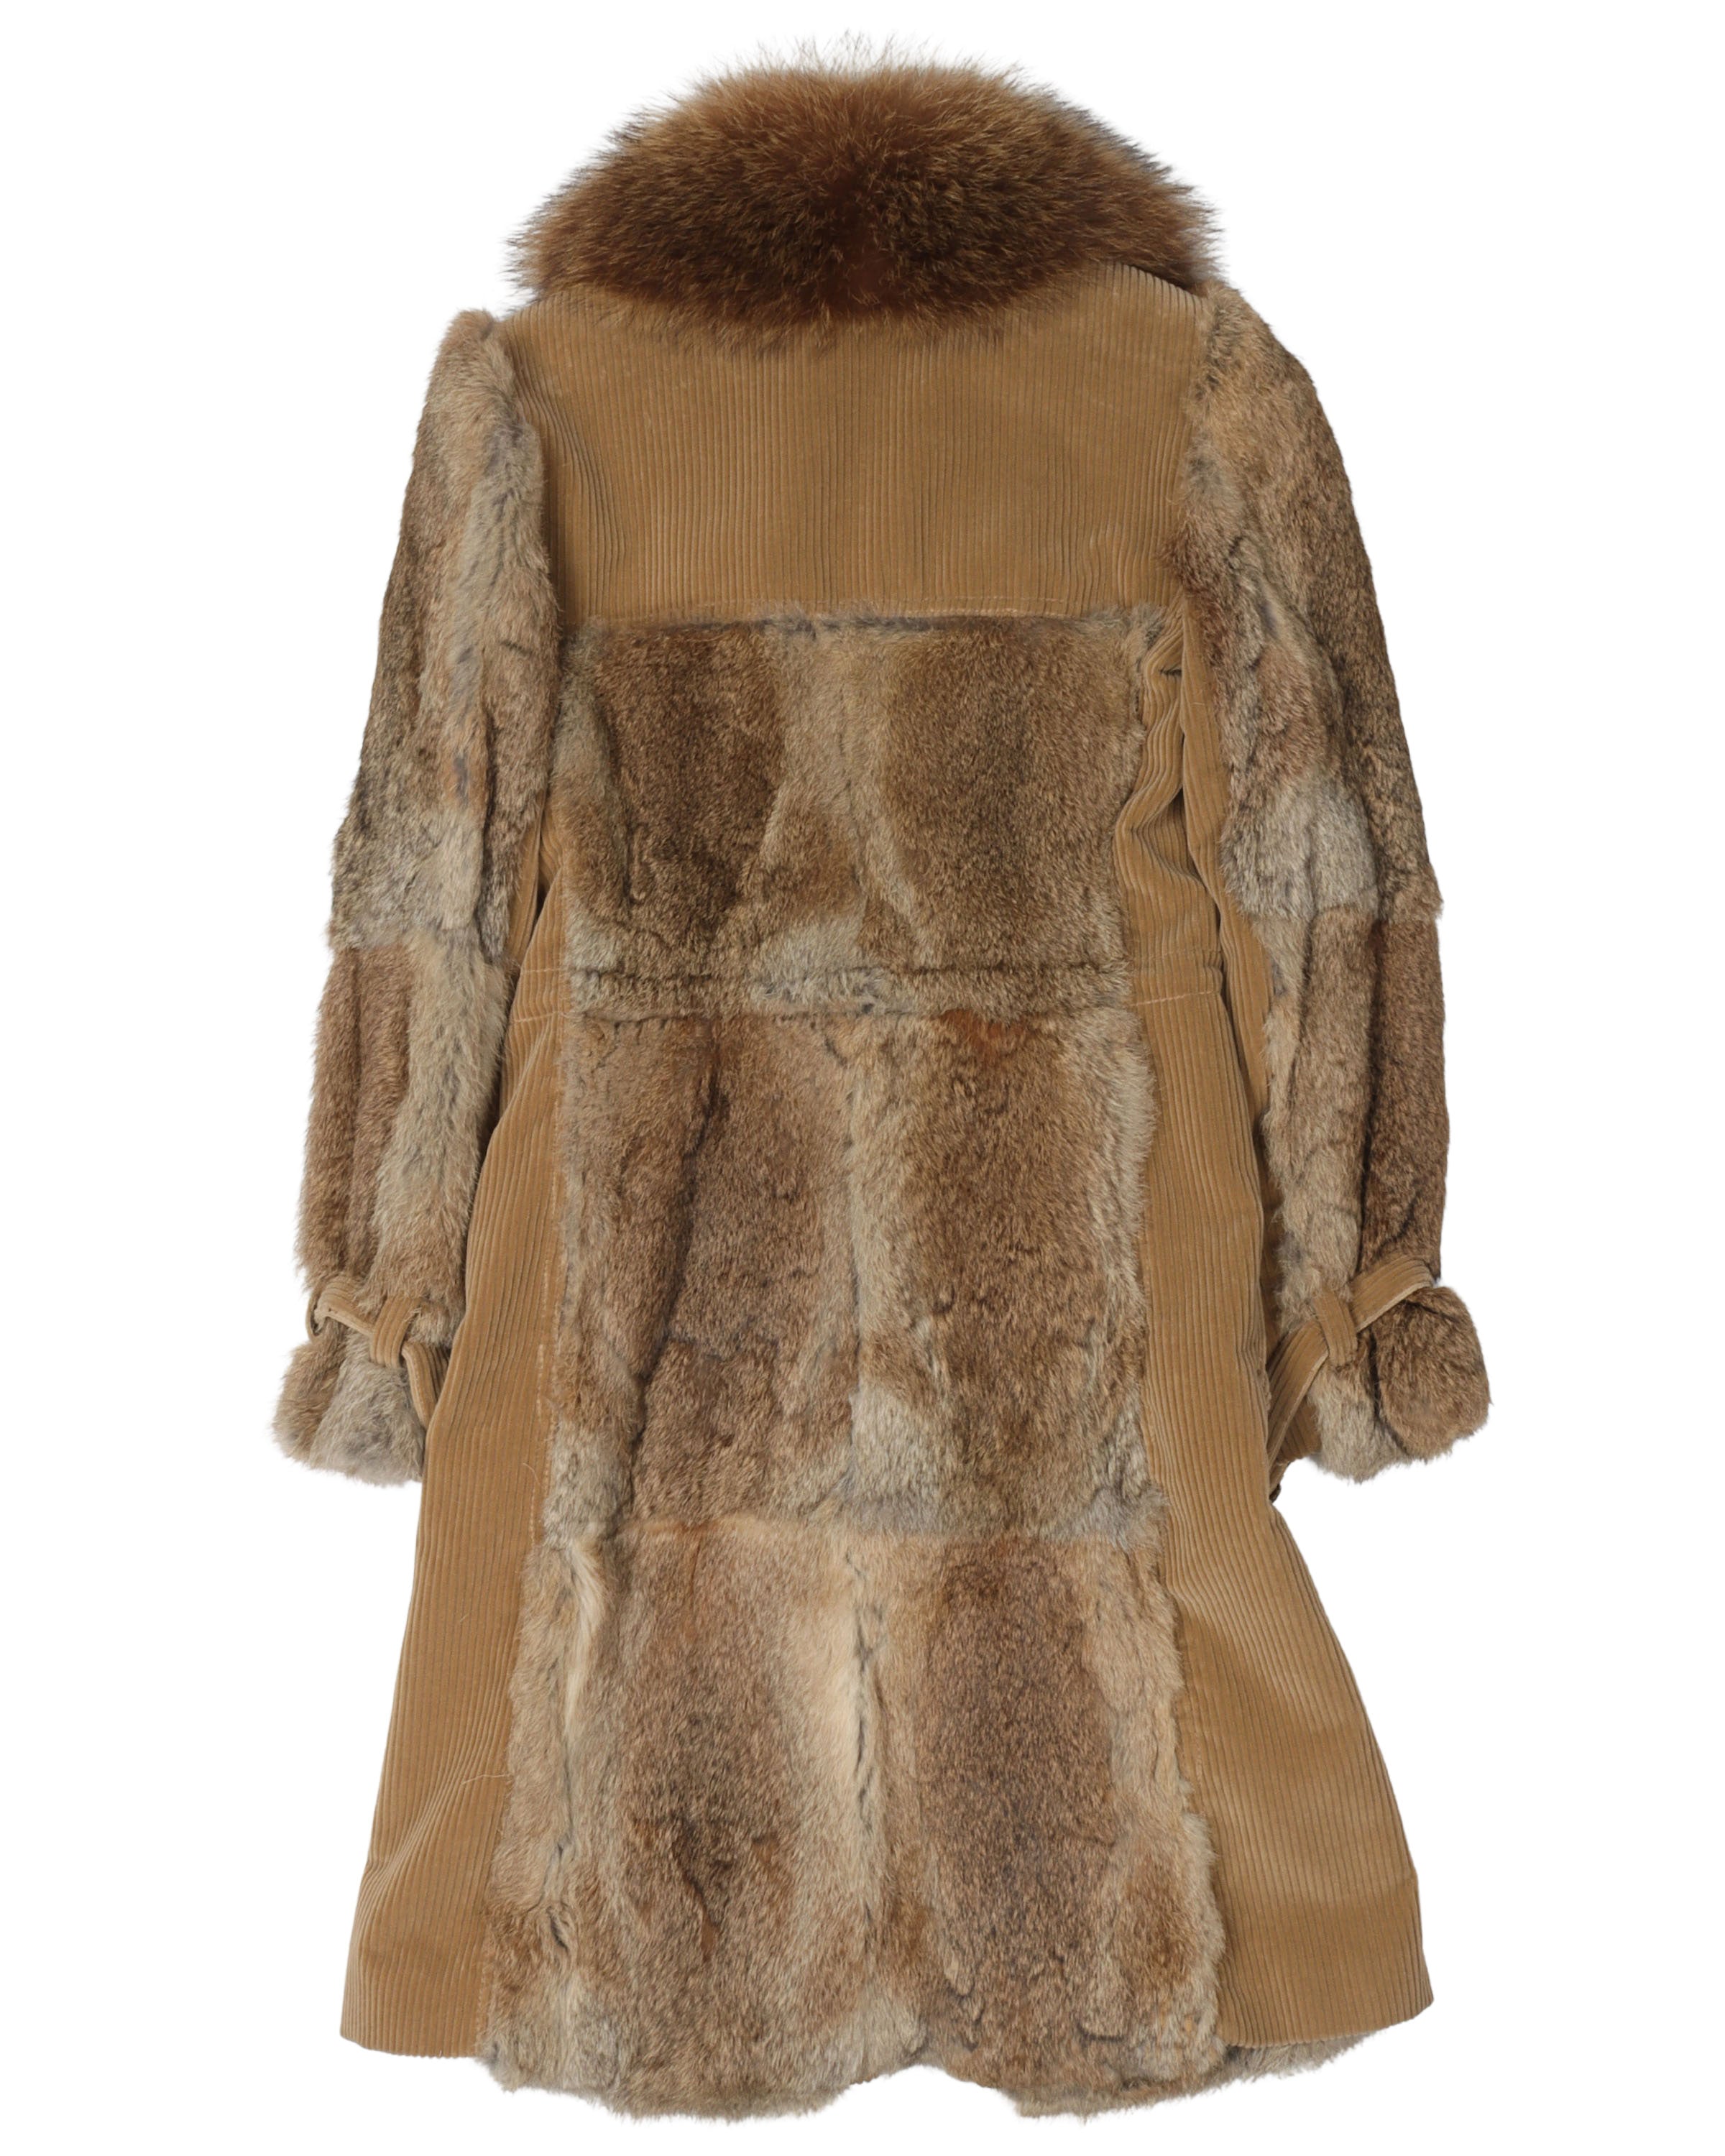 AW04 Rabbit Fur and Corduroy Coat